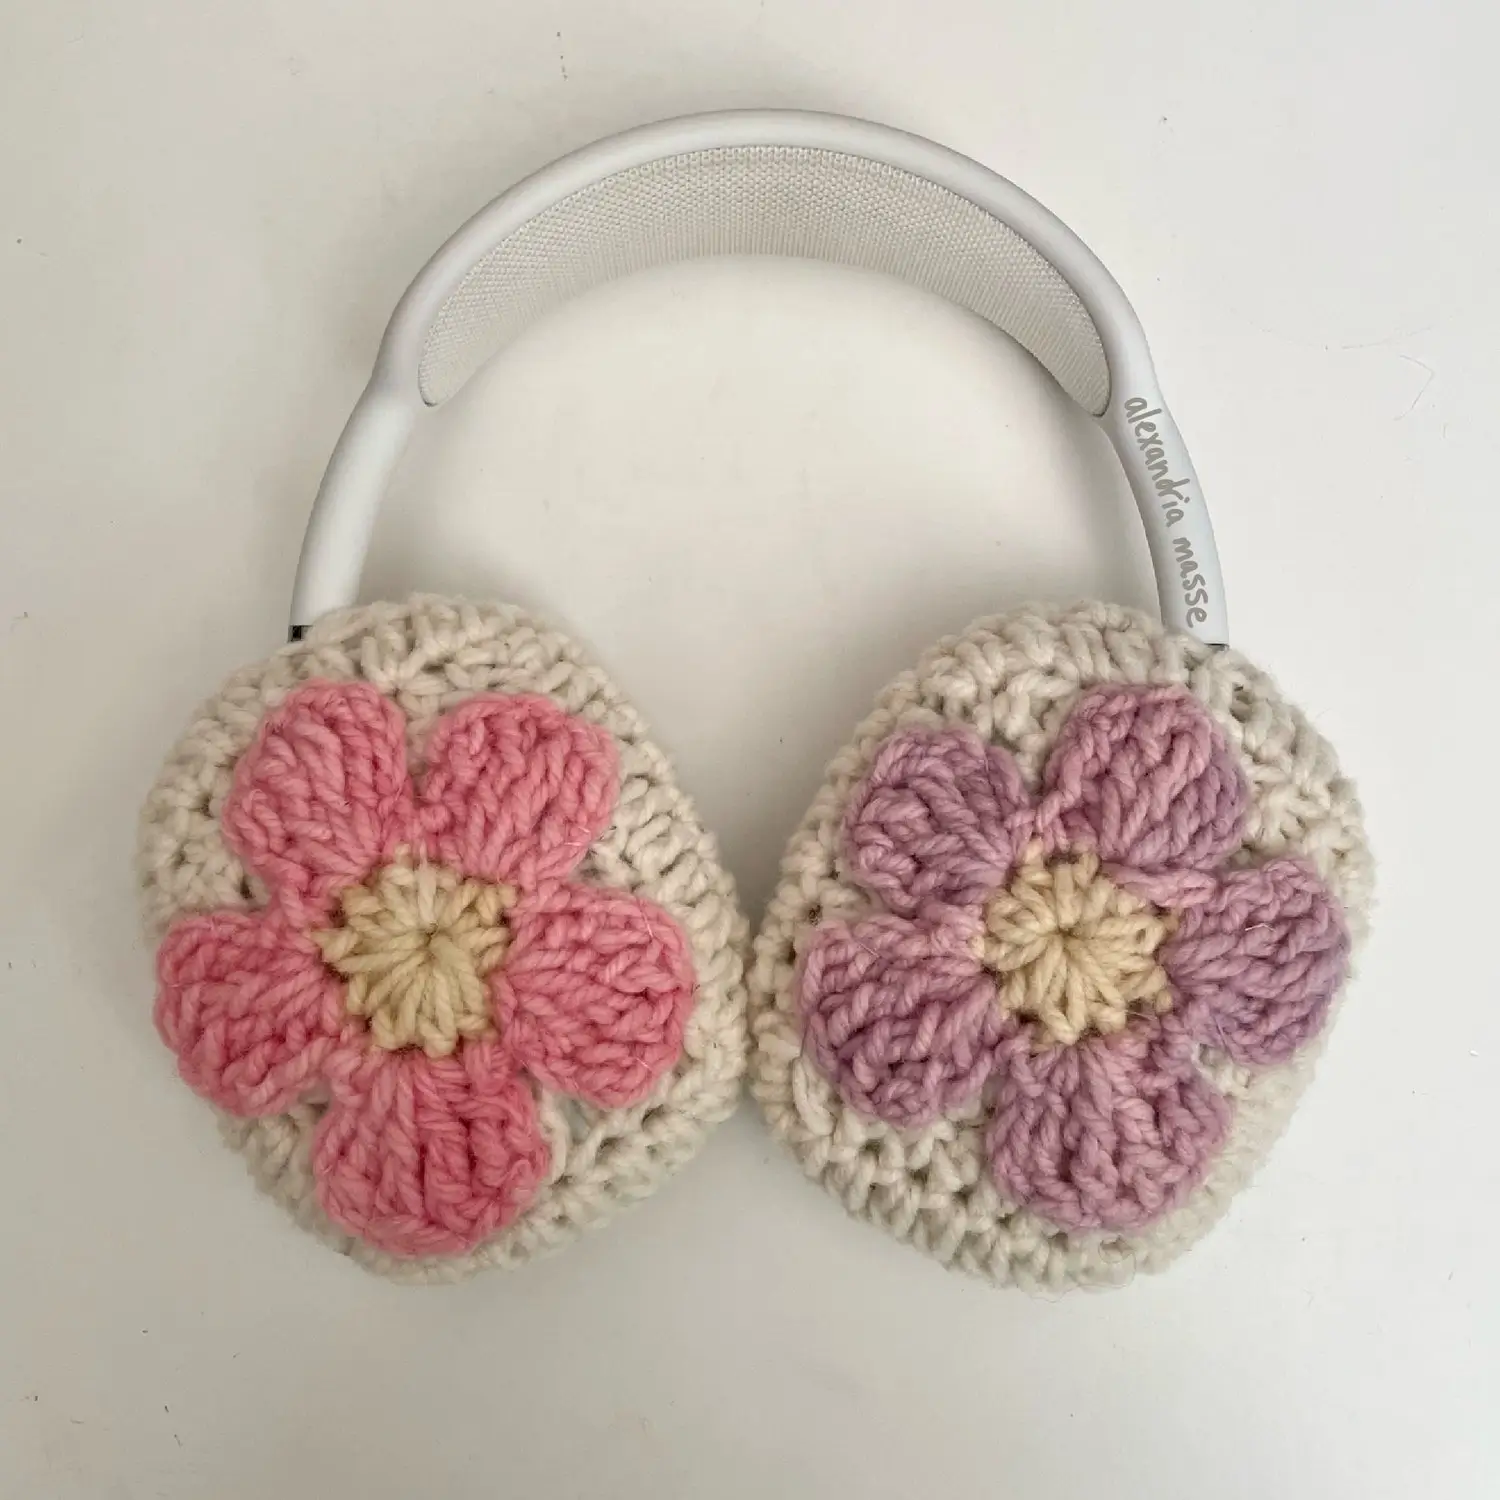 Crochet airpod max covers pattern free